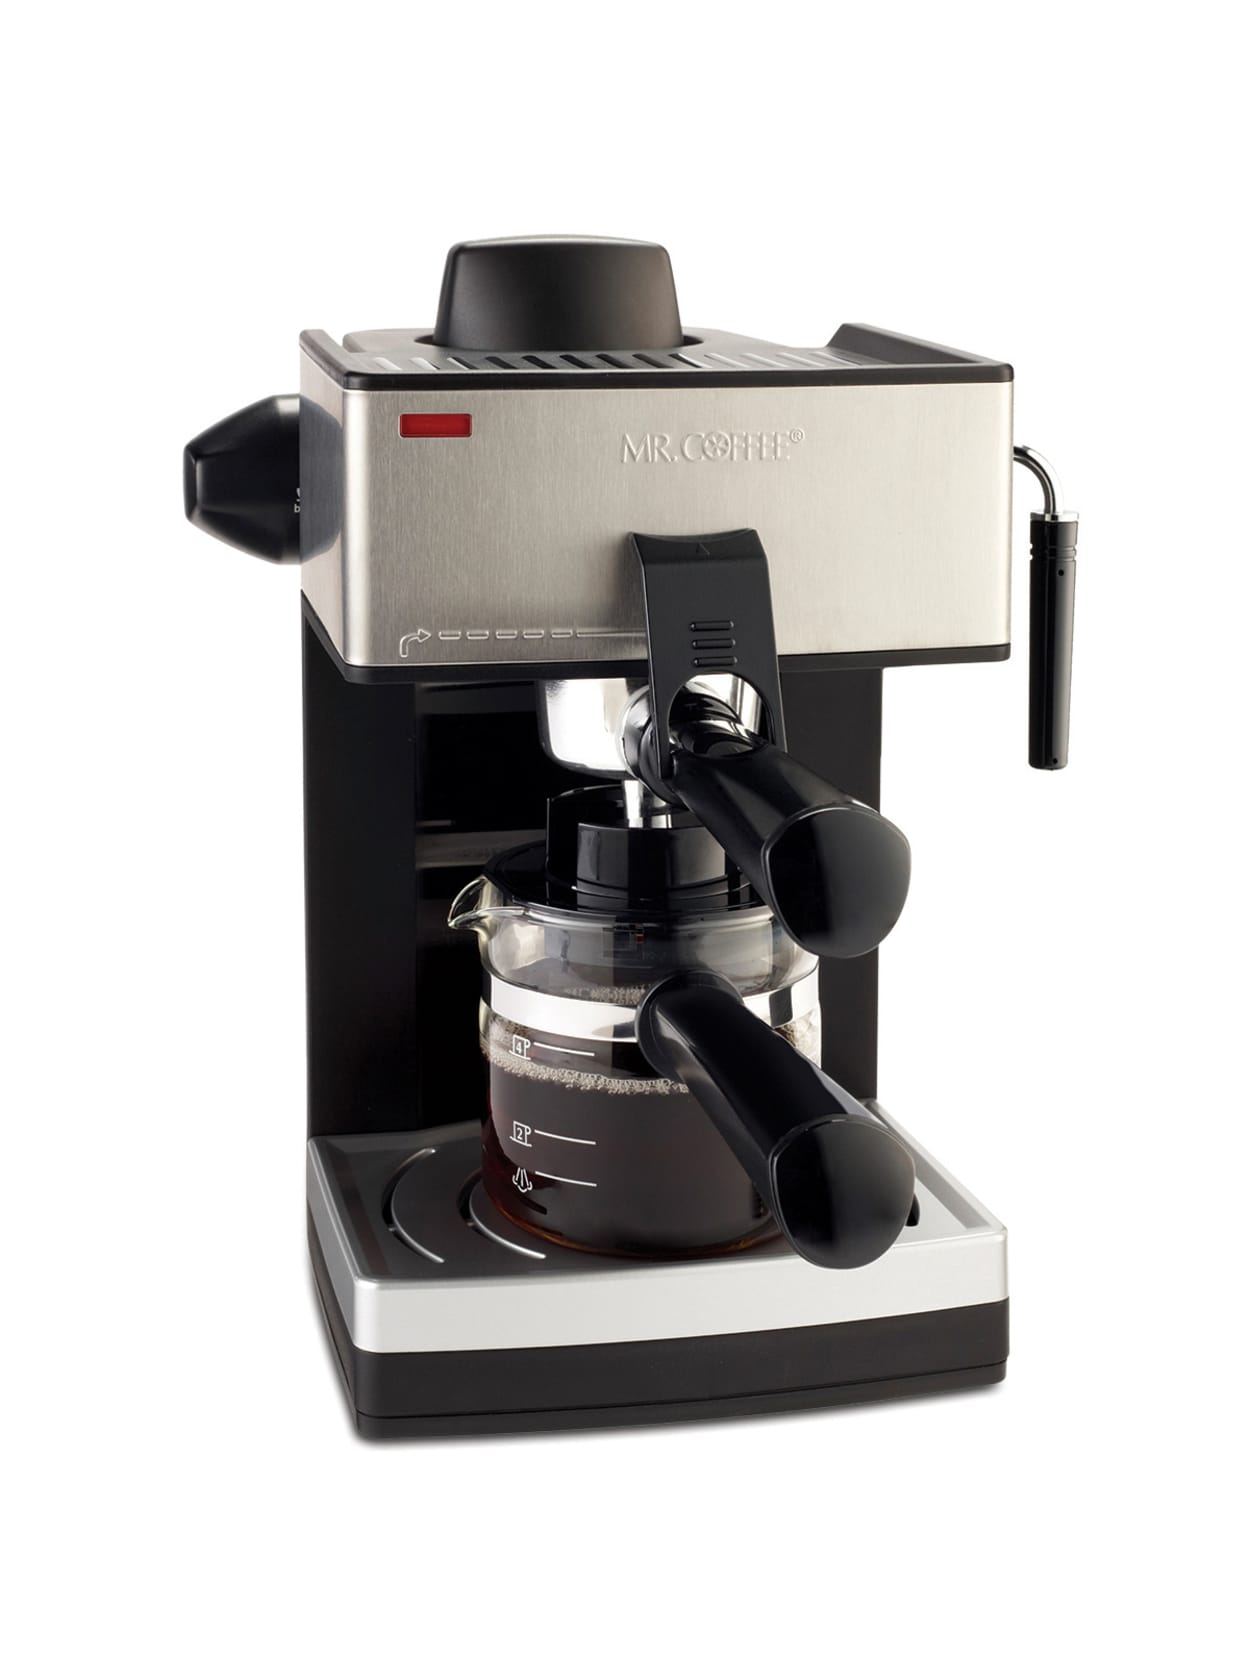 mr coffee espresso machine troubleshooting